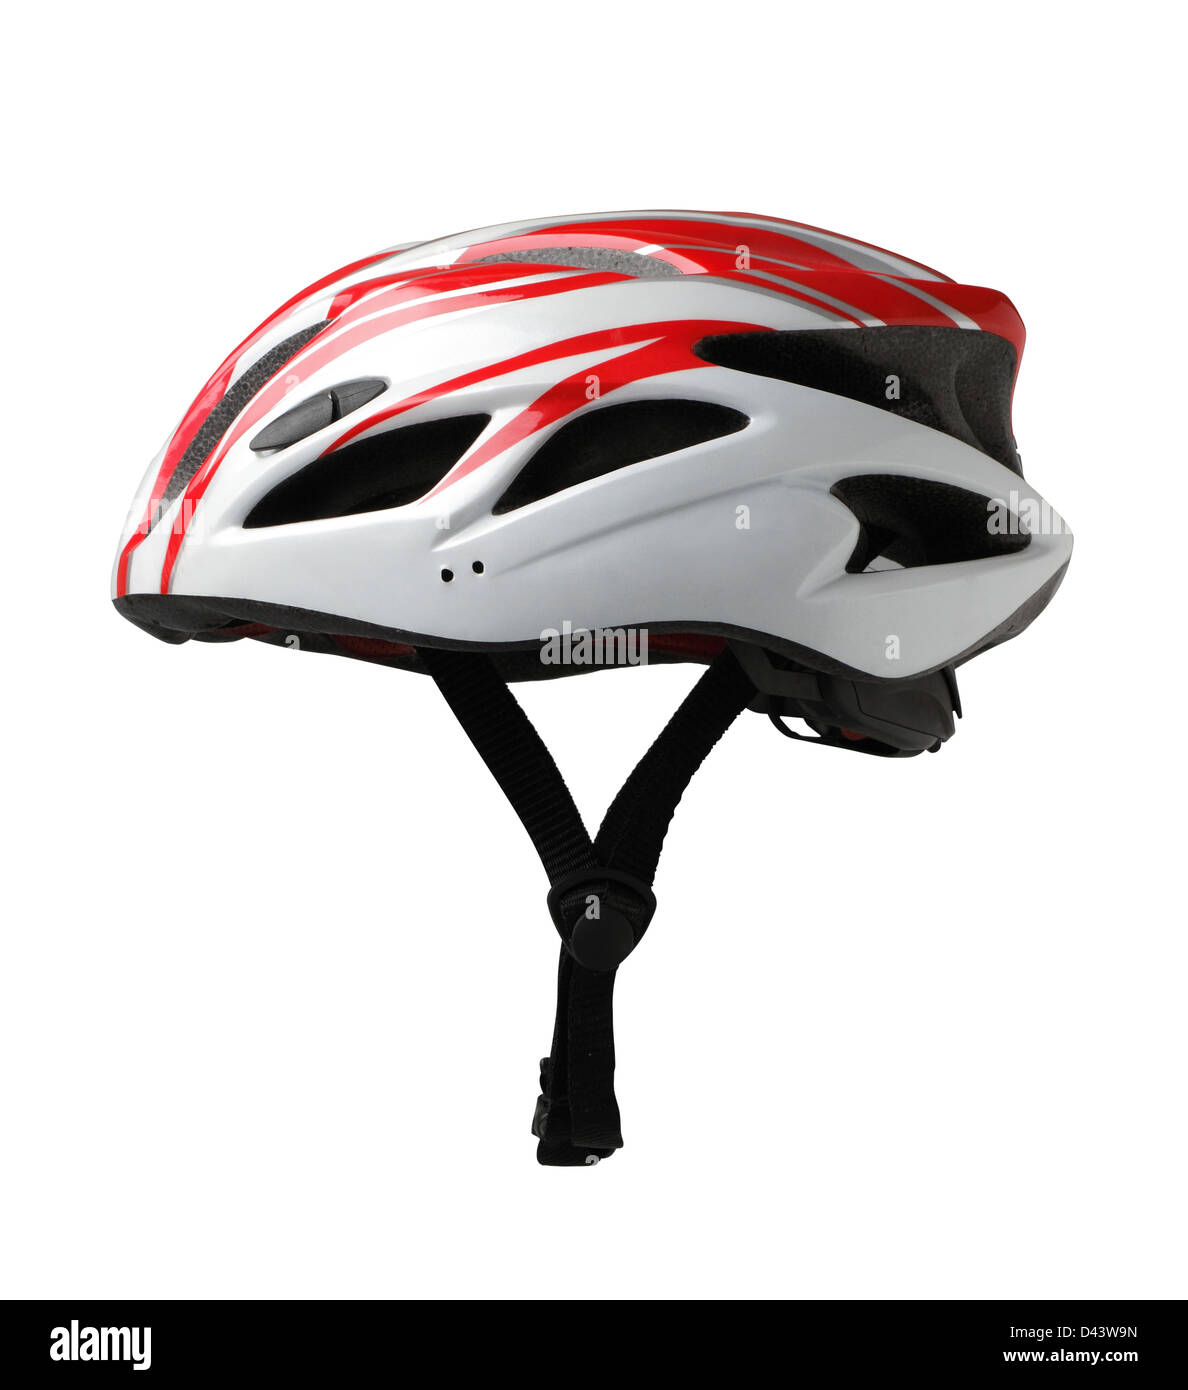 Bicycle mountain bike safety helmet isolated on white background Stock Photo